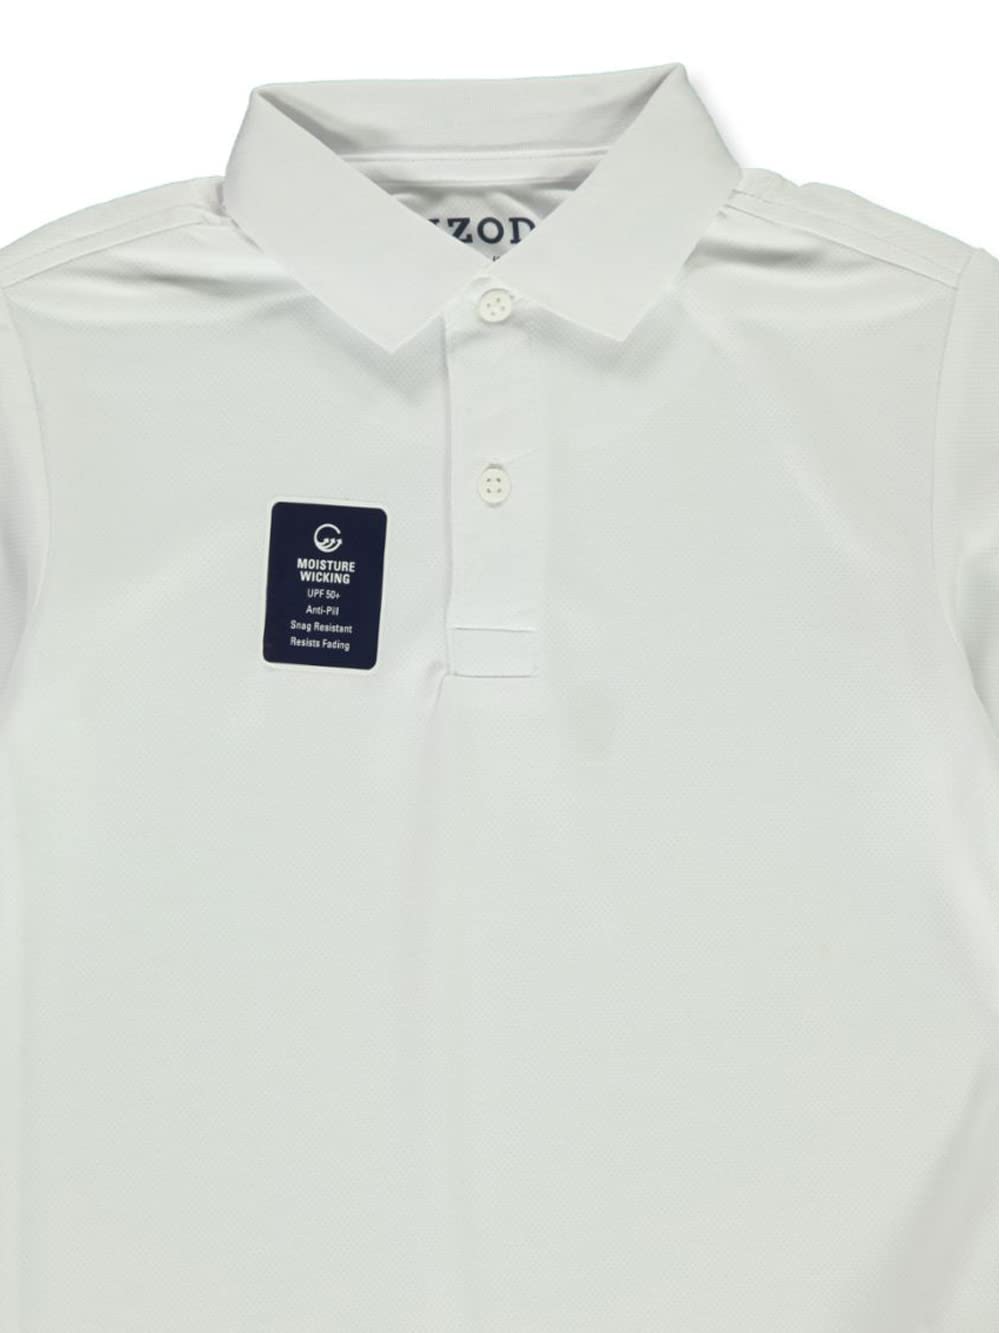 IZOD Big Boys' Performance Polo Shirt - White, 18-20